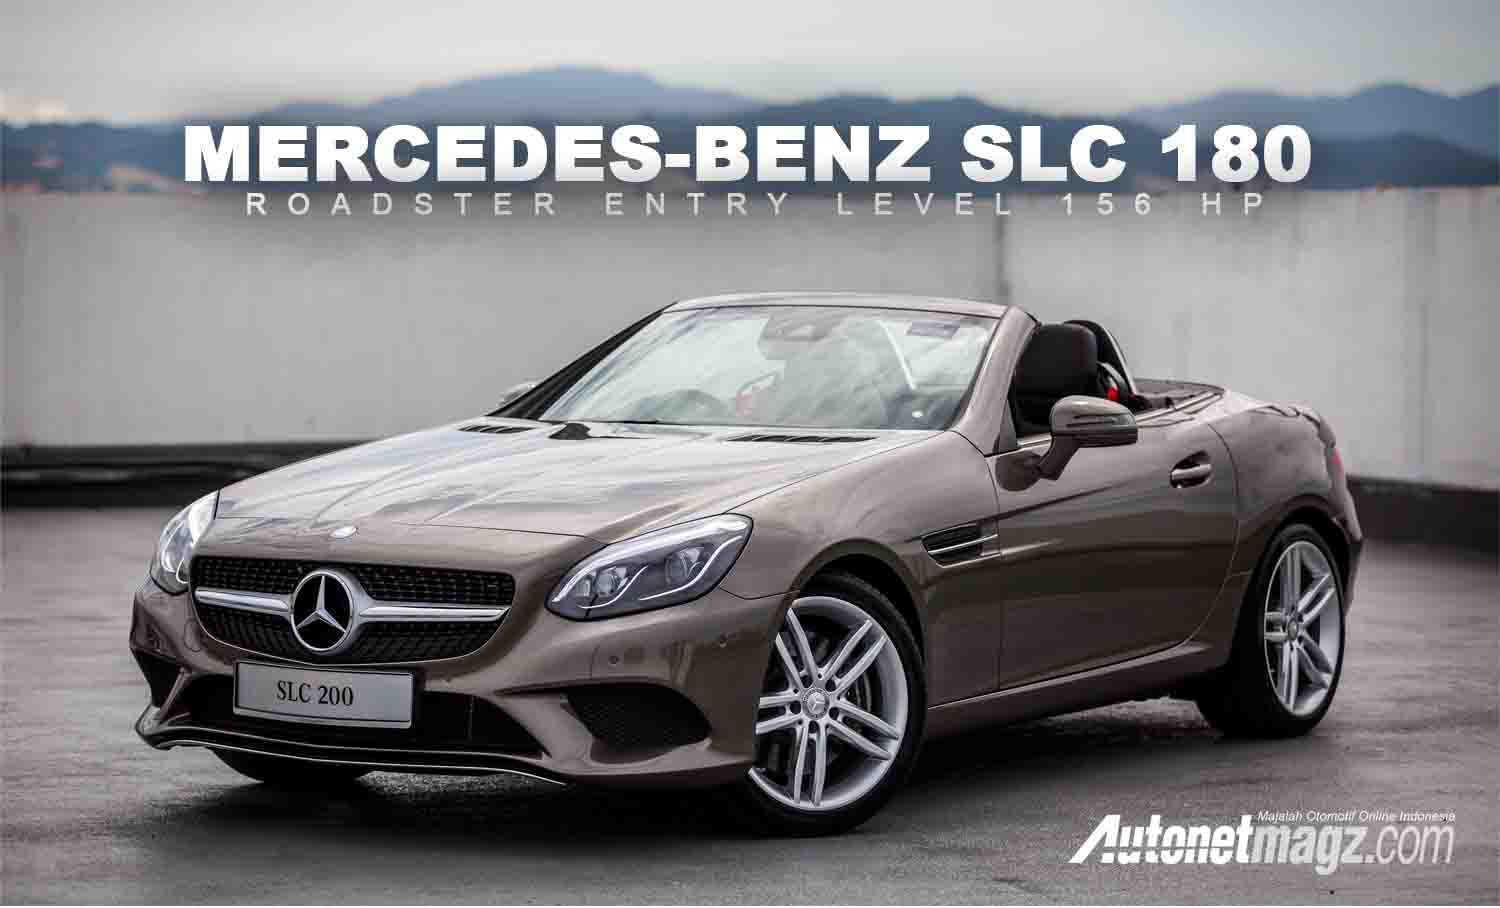 Berita, cover Mercedes-Benz SLC 180, Kelas Entry level 156 hp: Mercedes-Benz SLC 180, Kelas Entry level 156 hp